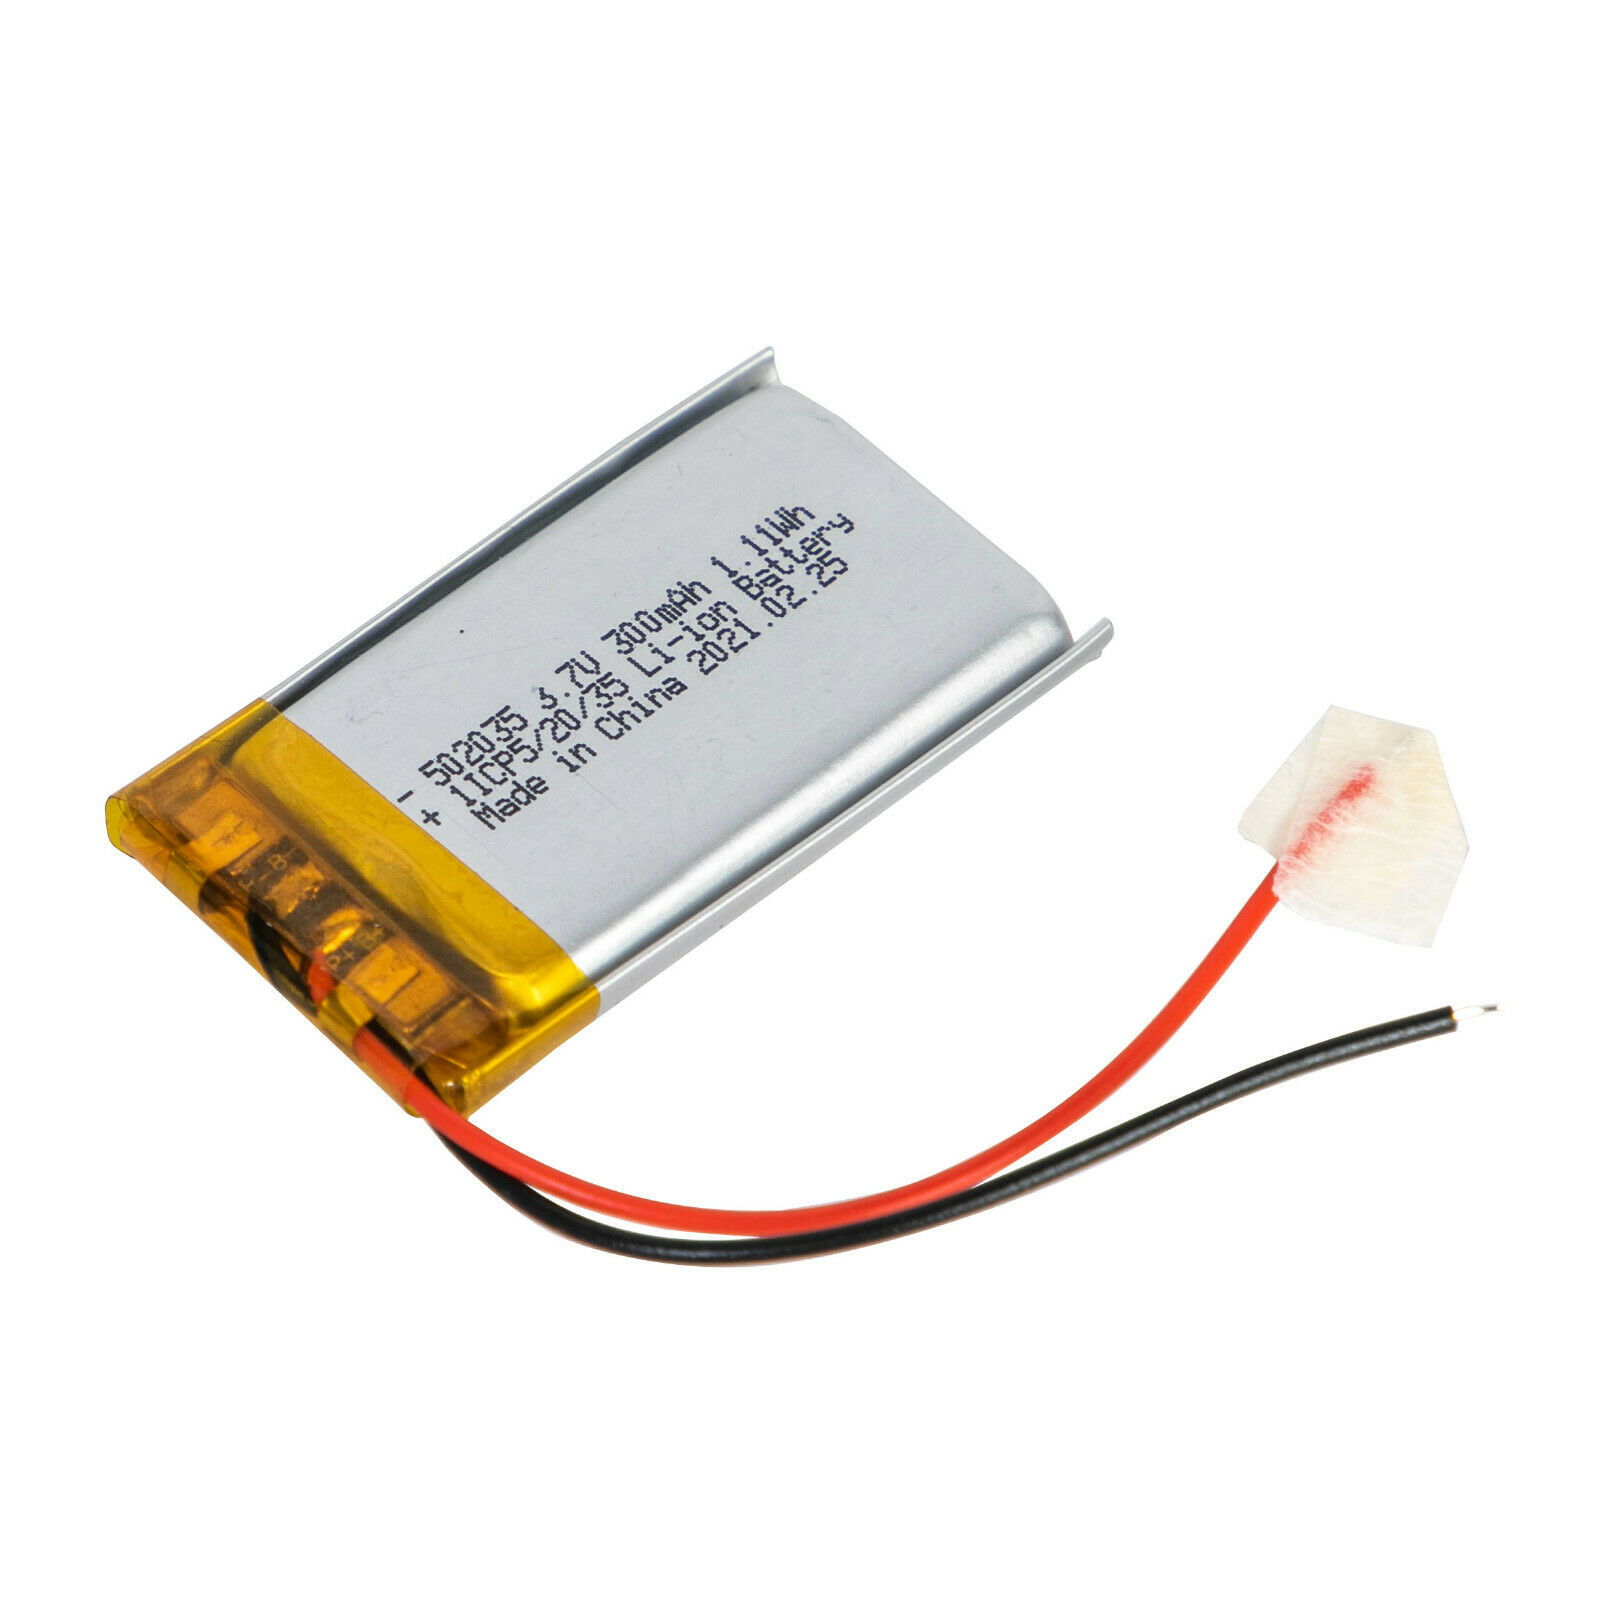 Batteries d'affichage Bosch eBike intuvia 502035 batterie 3.7V 300mAh